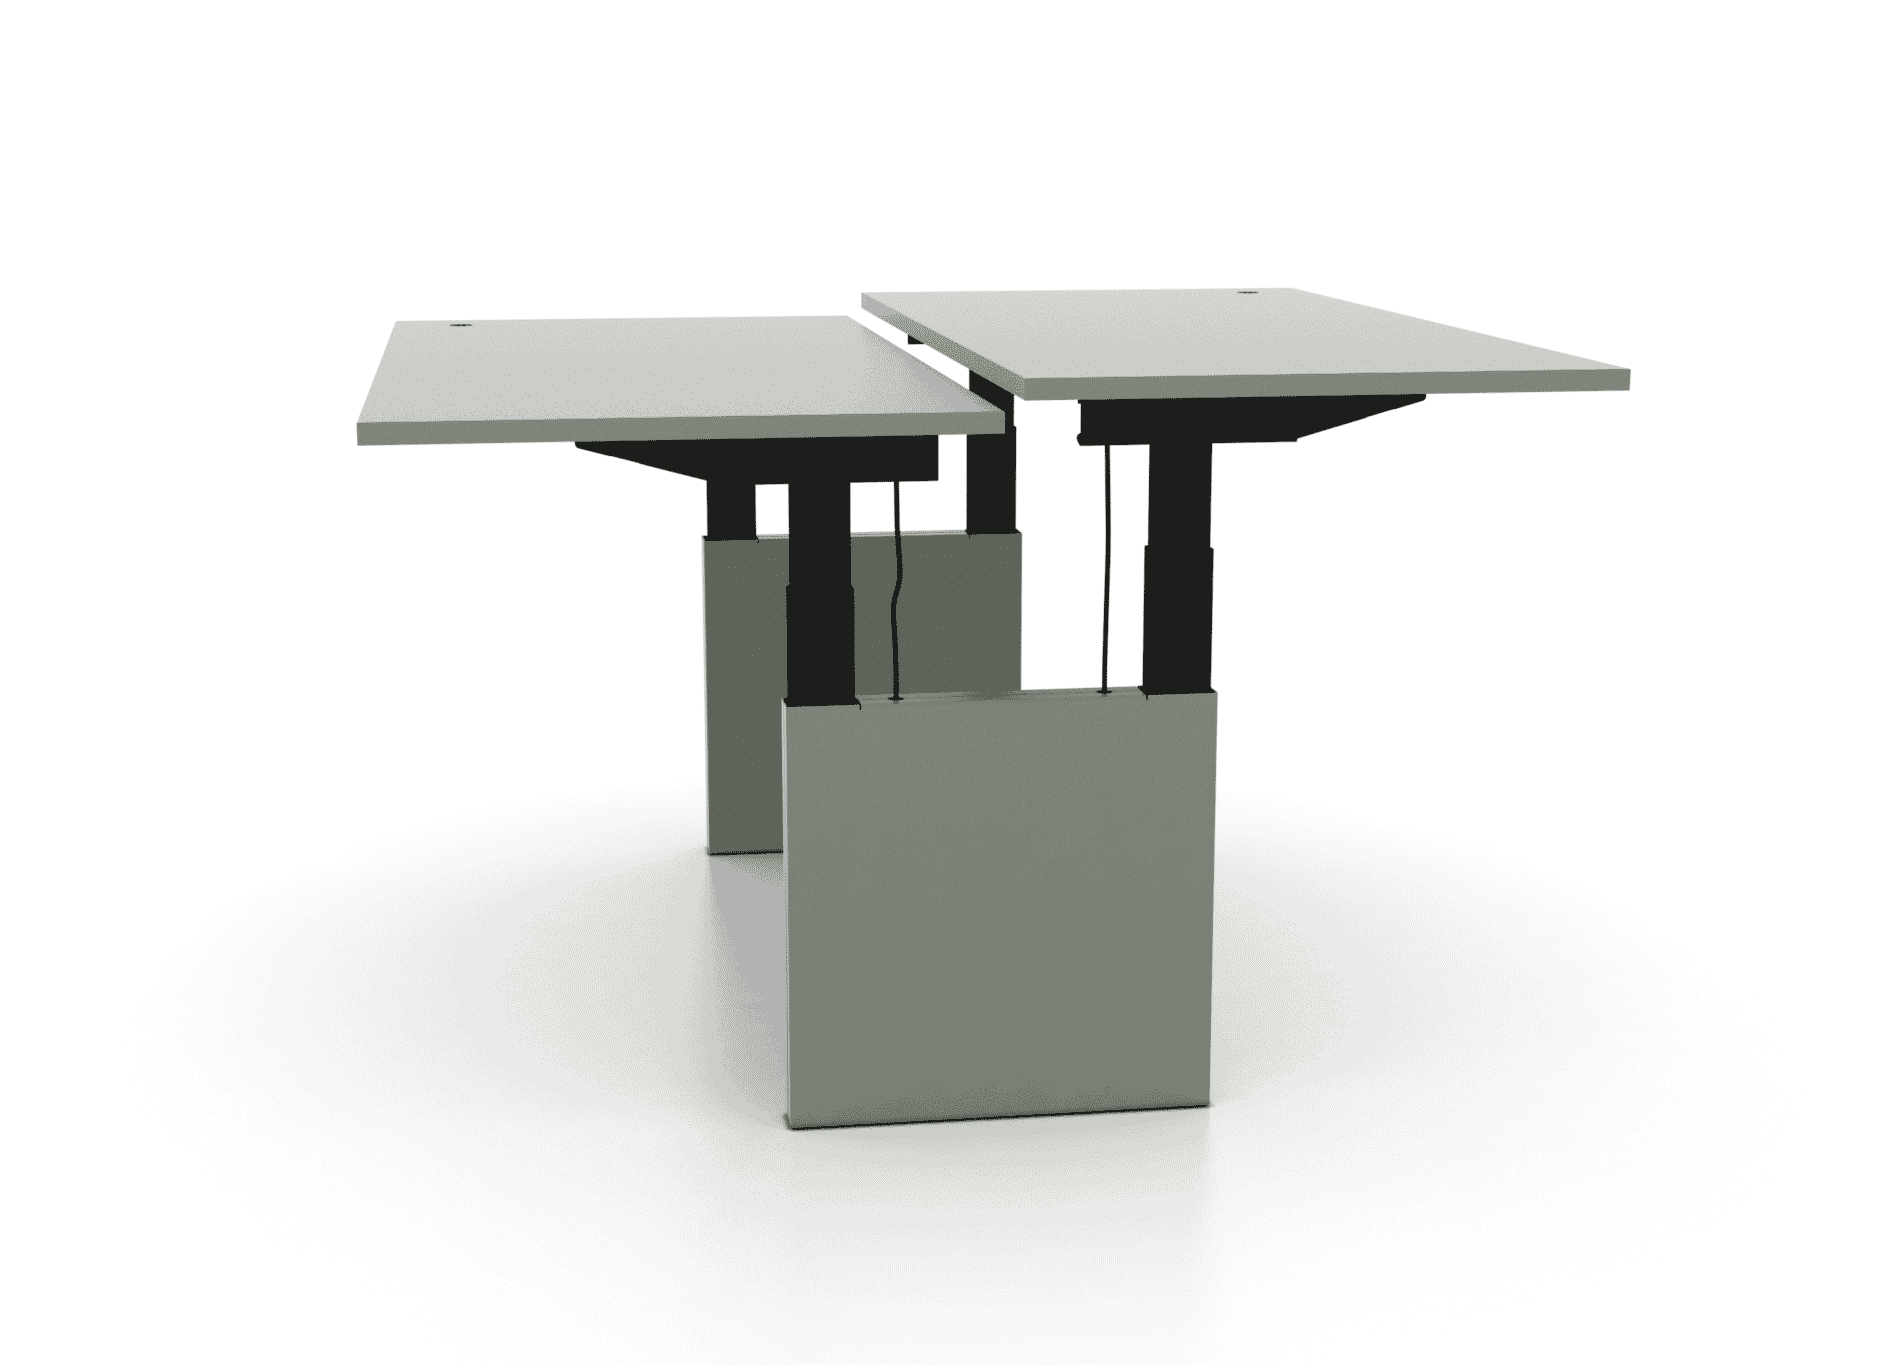 jensenplus blok twin double desk height adjustable table office